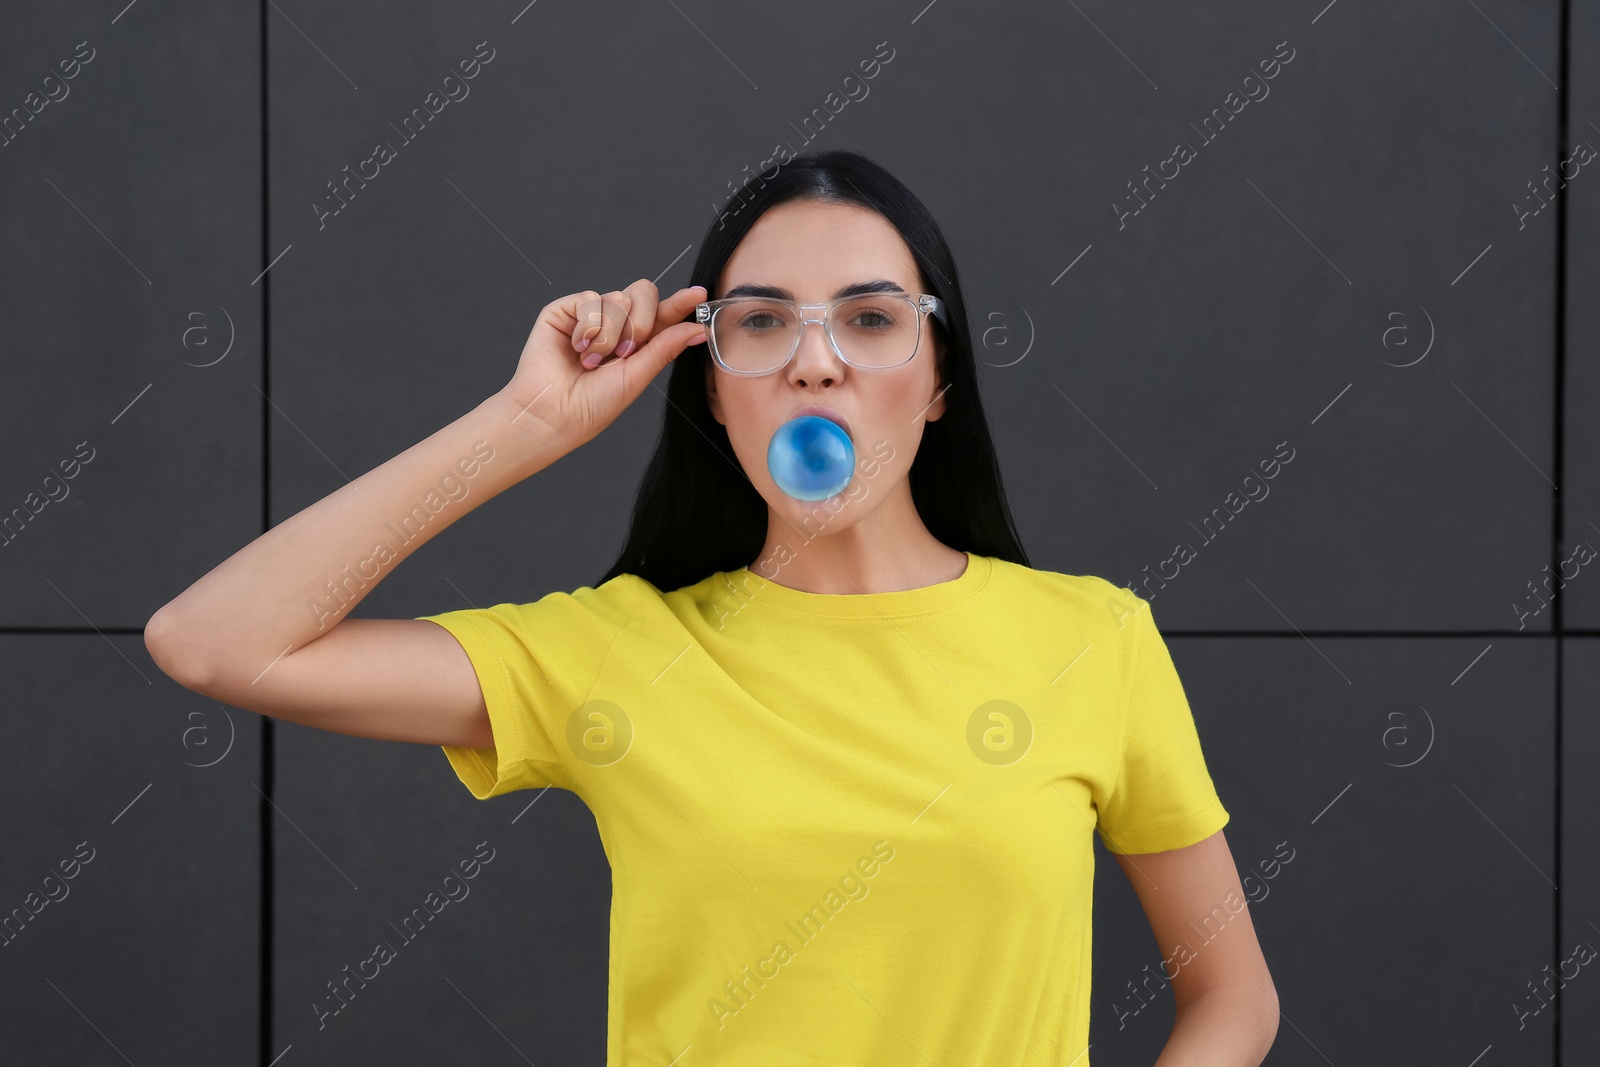 Photo of Beautiful woman blowing gum near dark tiled wall outdoors